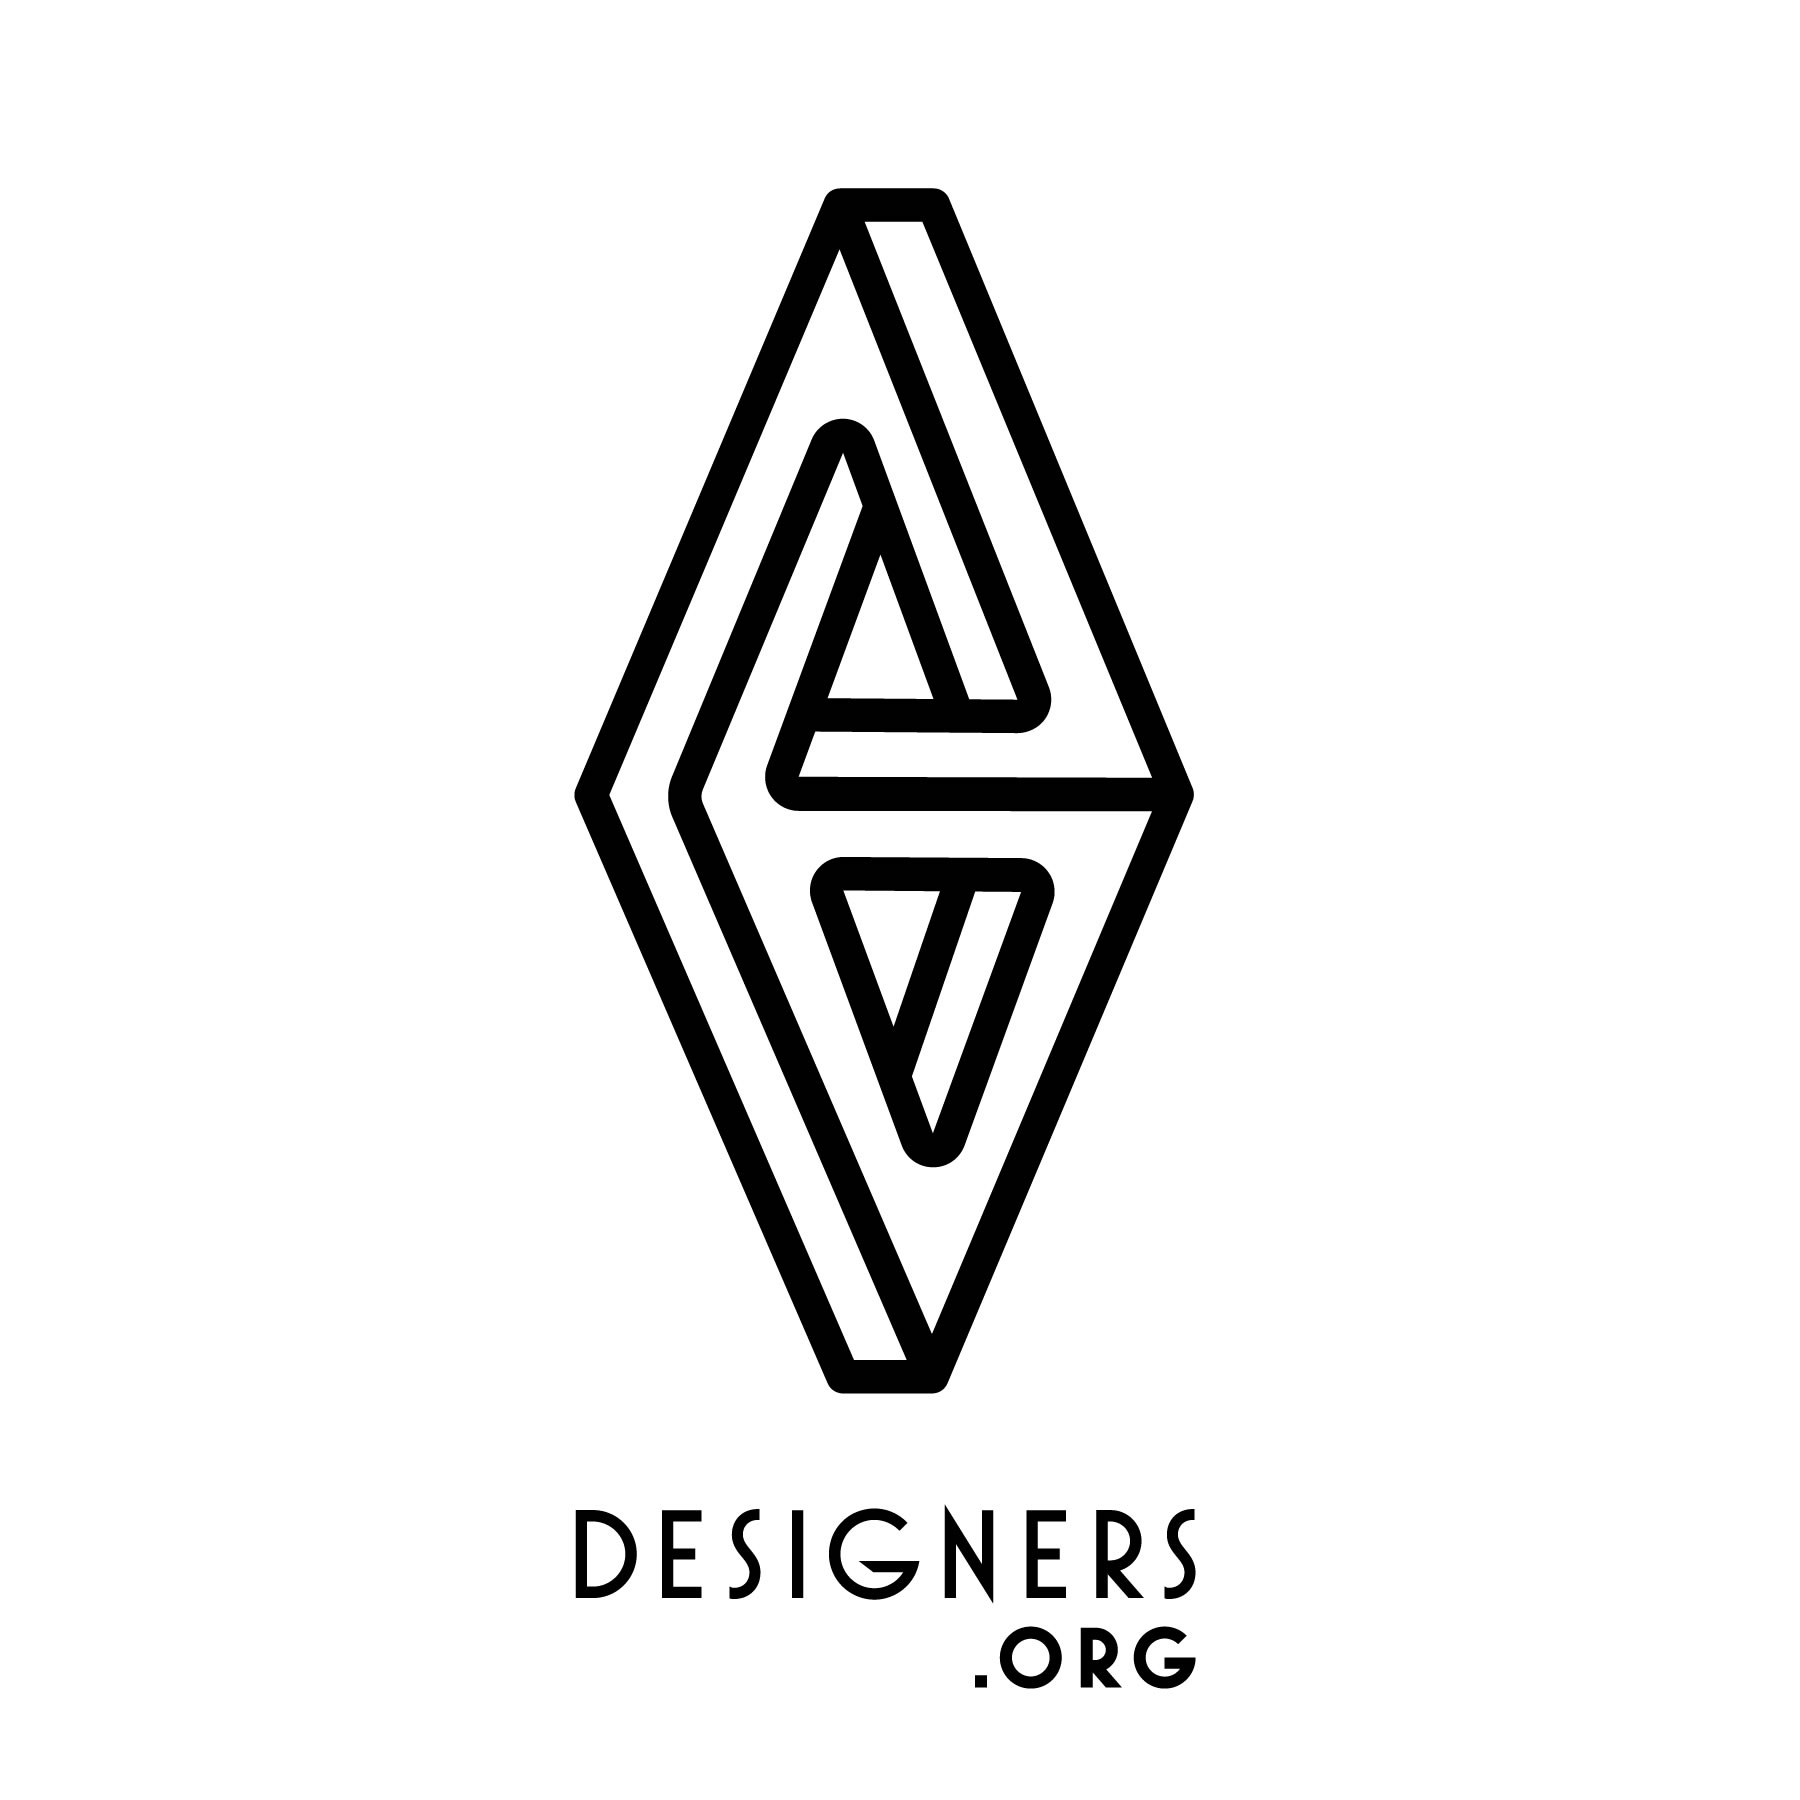 logo of the DESIGNERS.ORG